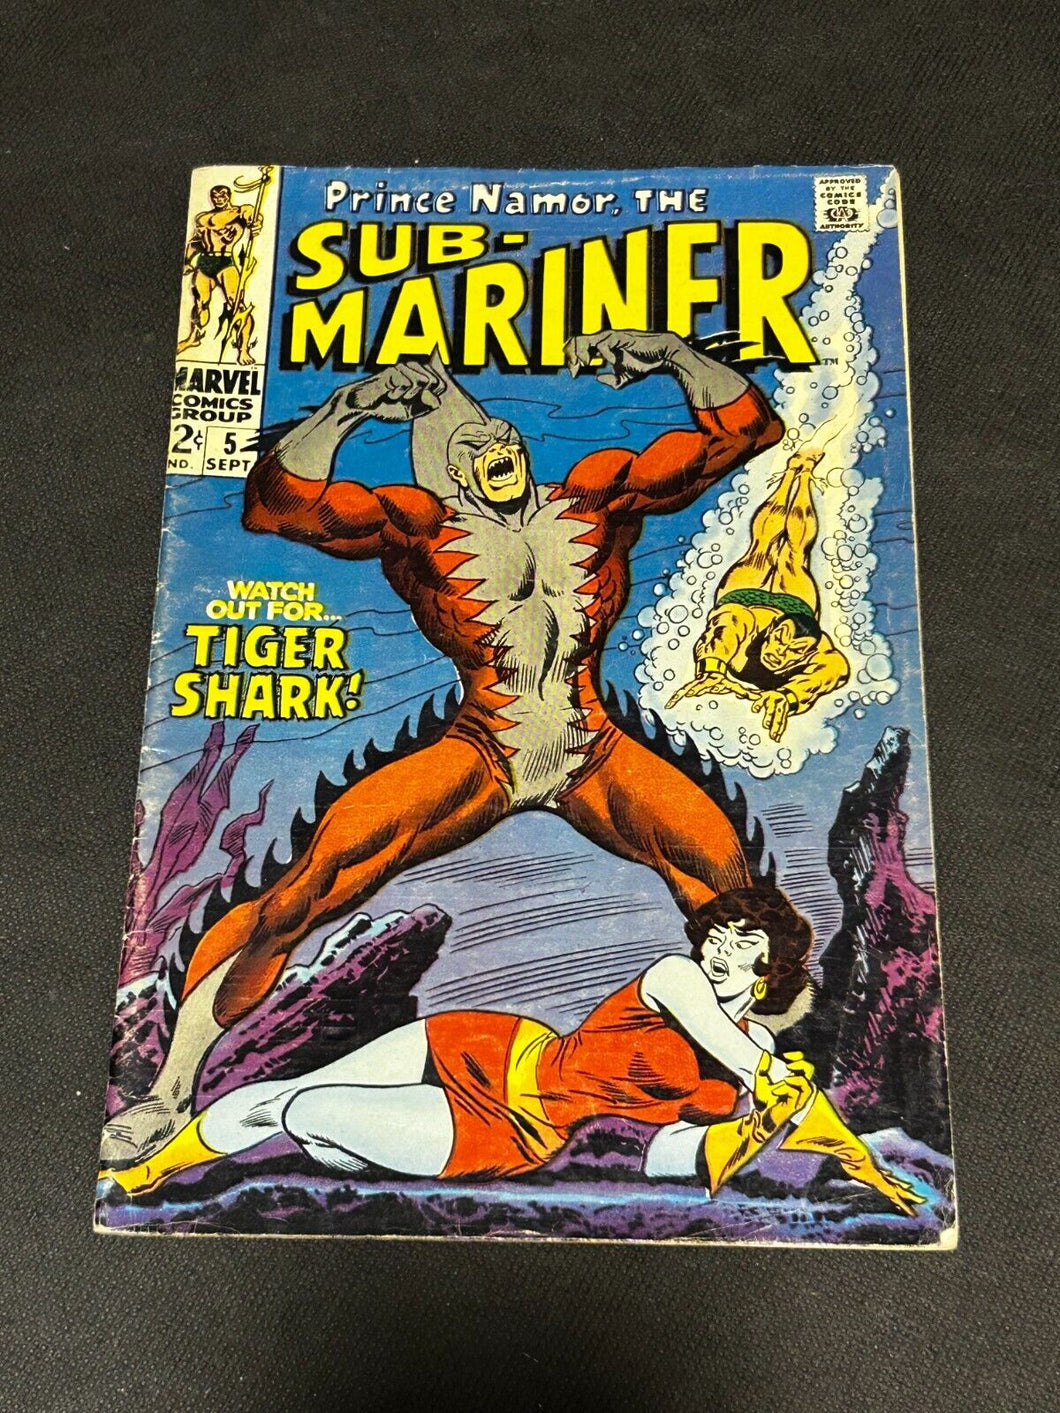 1968 Marvel Comics Prince Namor the Sub-Mariner #5, VG+ 4.5